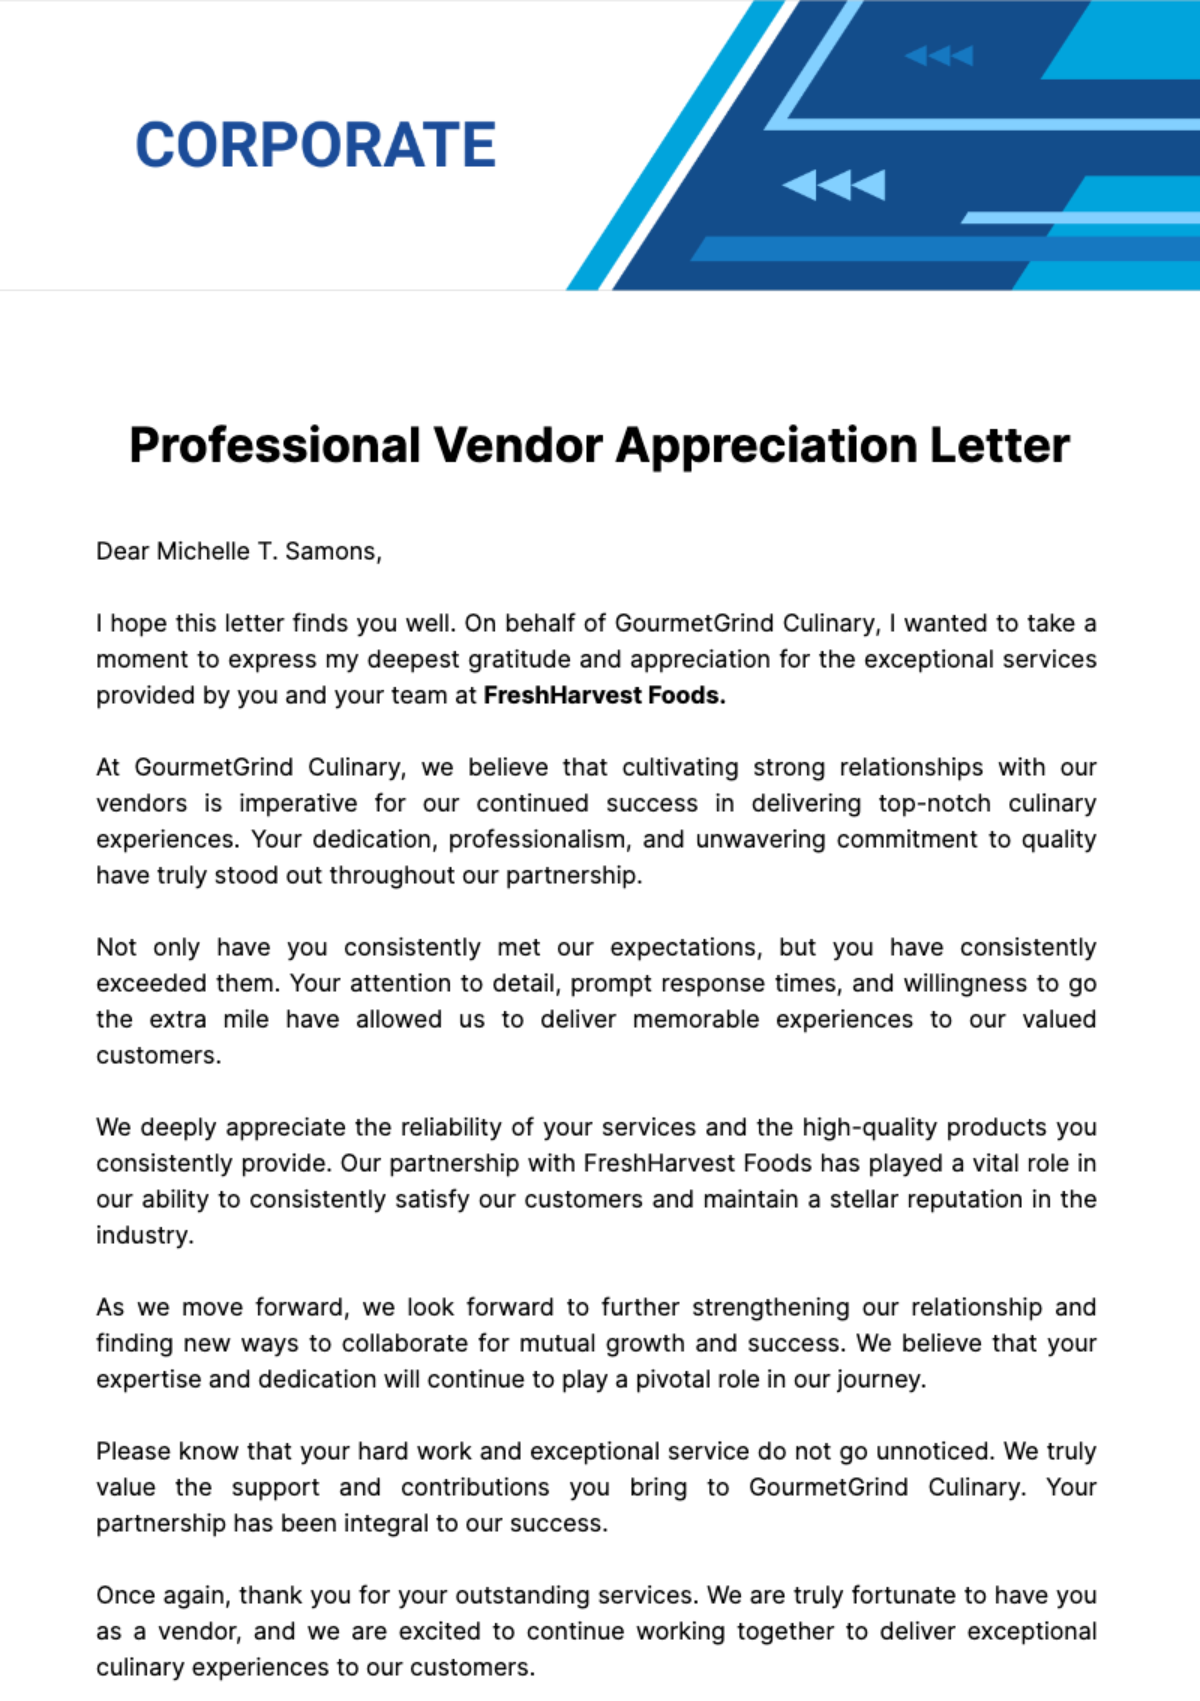 Professional Vendor Appreciation Letter Template